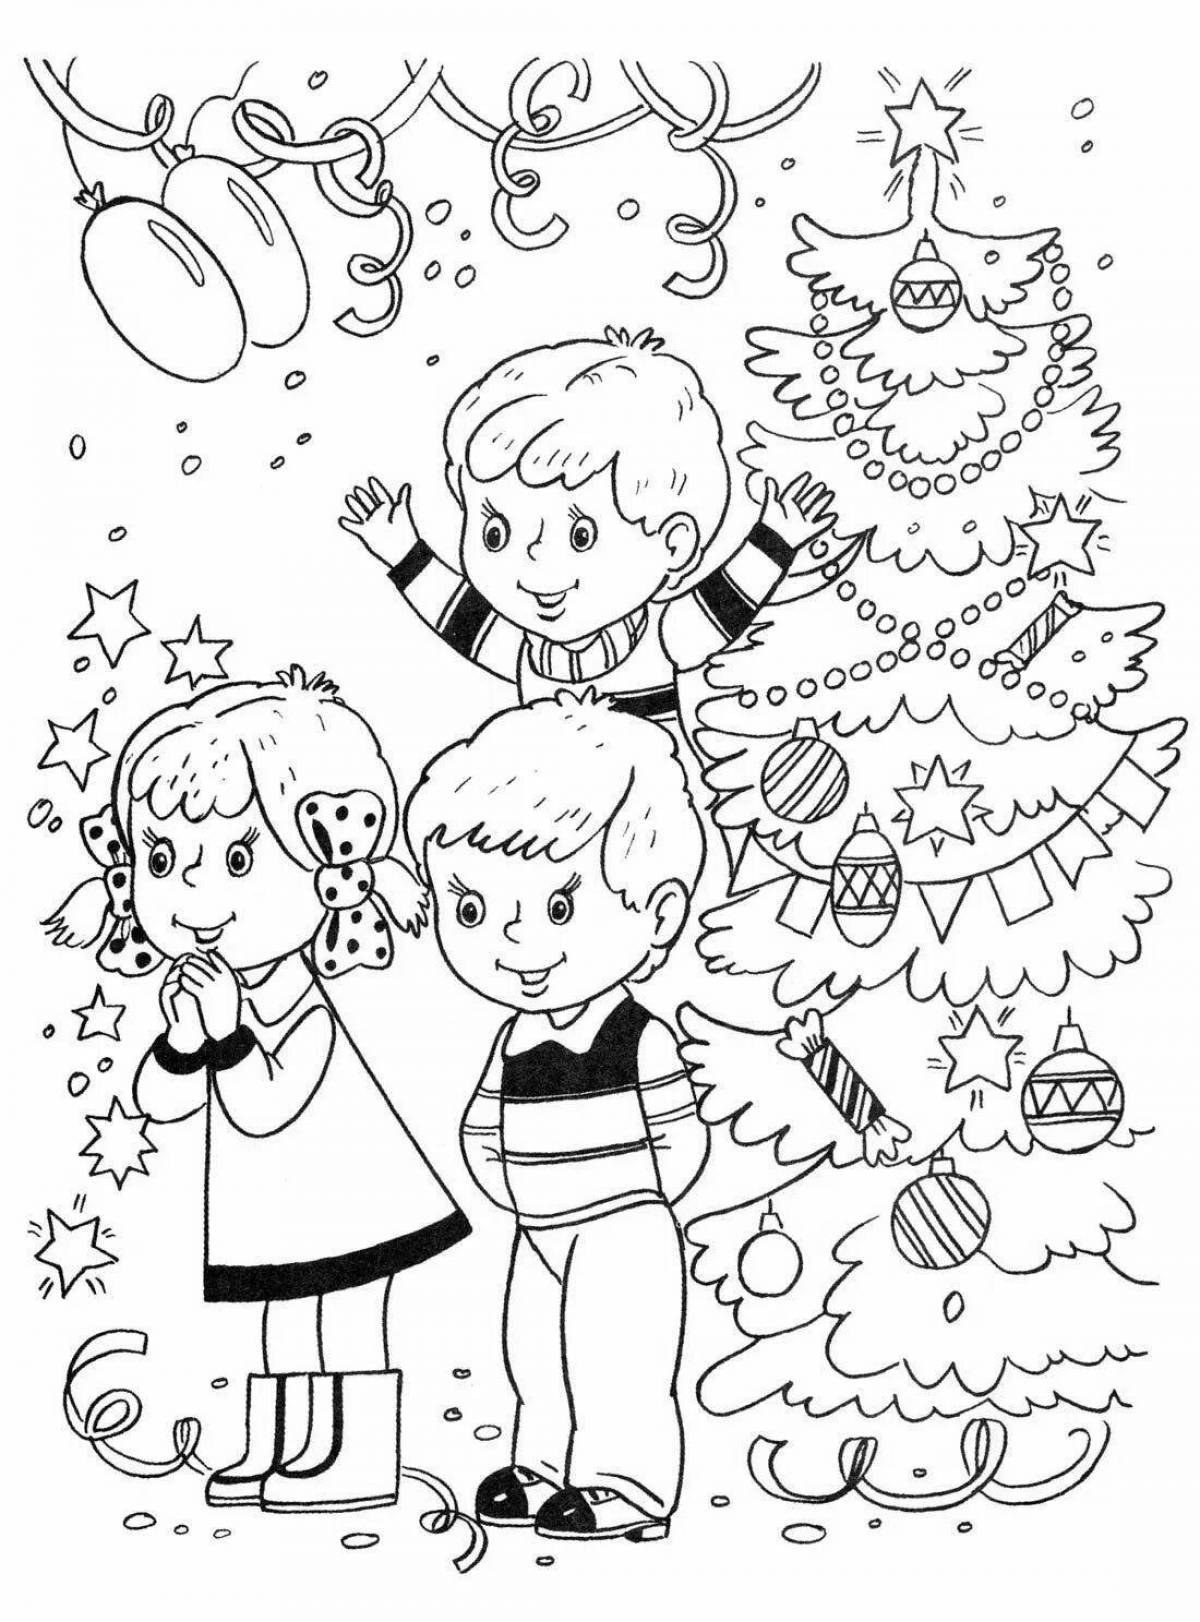 Children decorate the tree